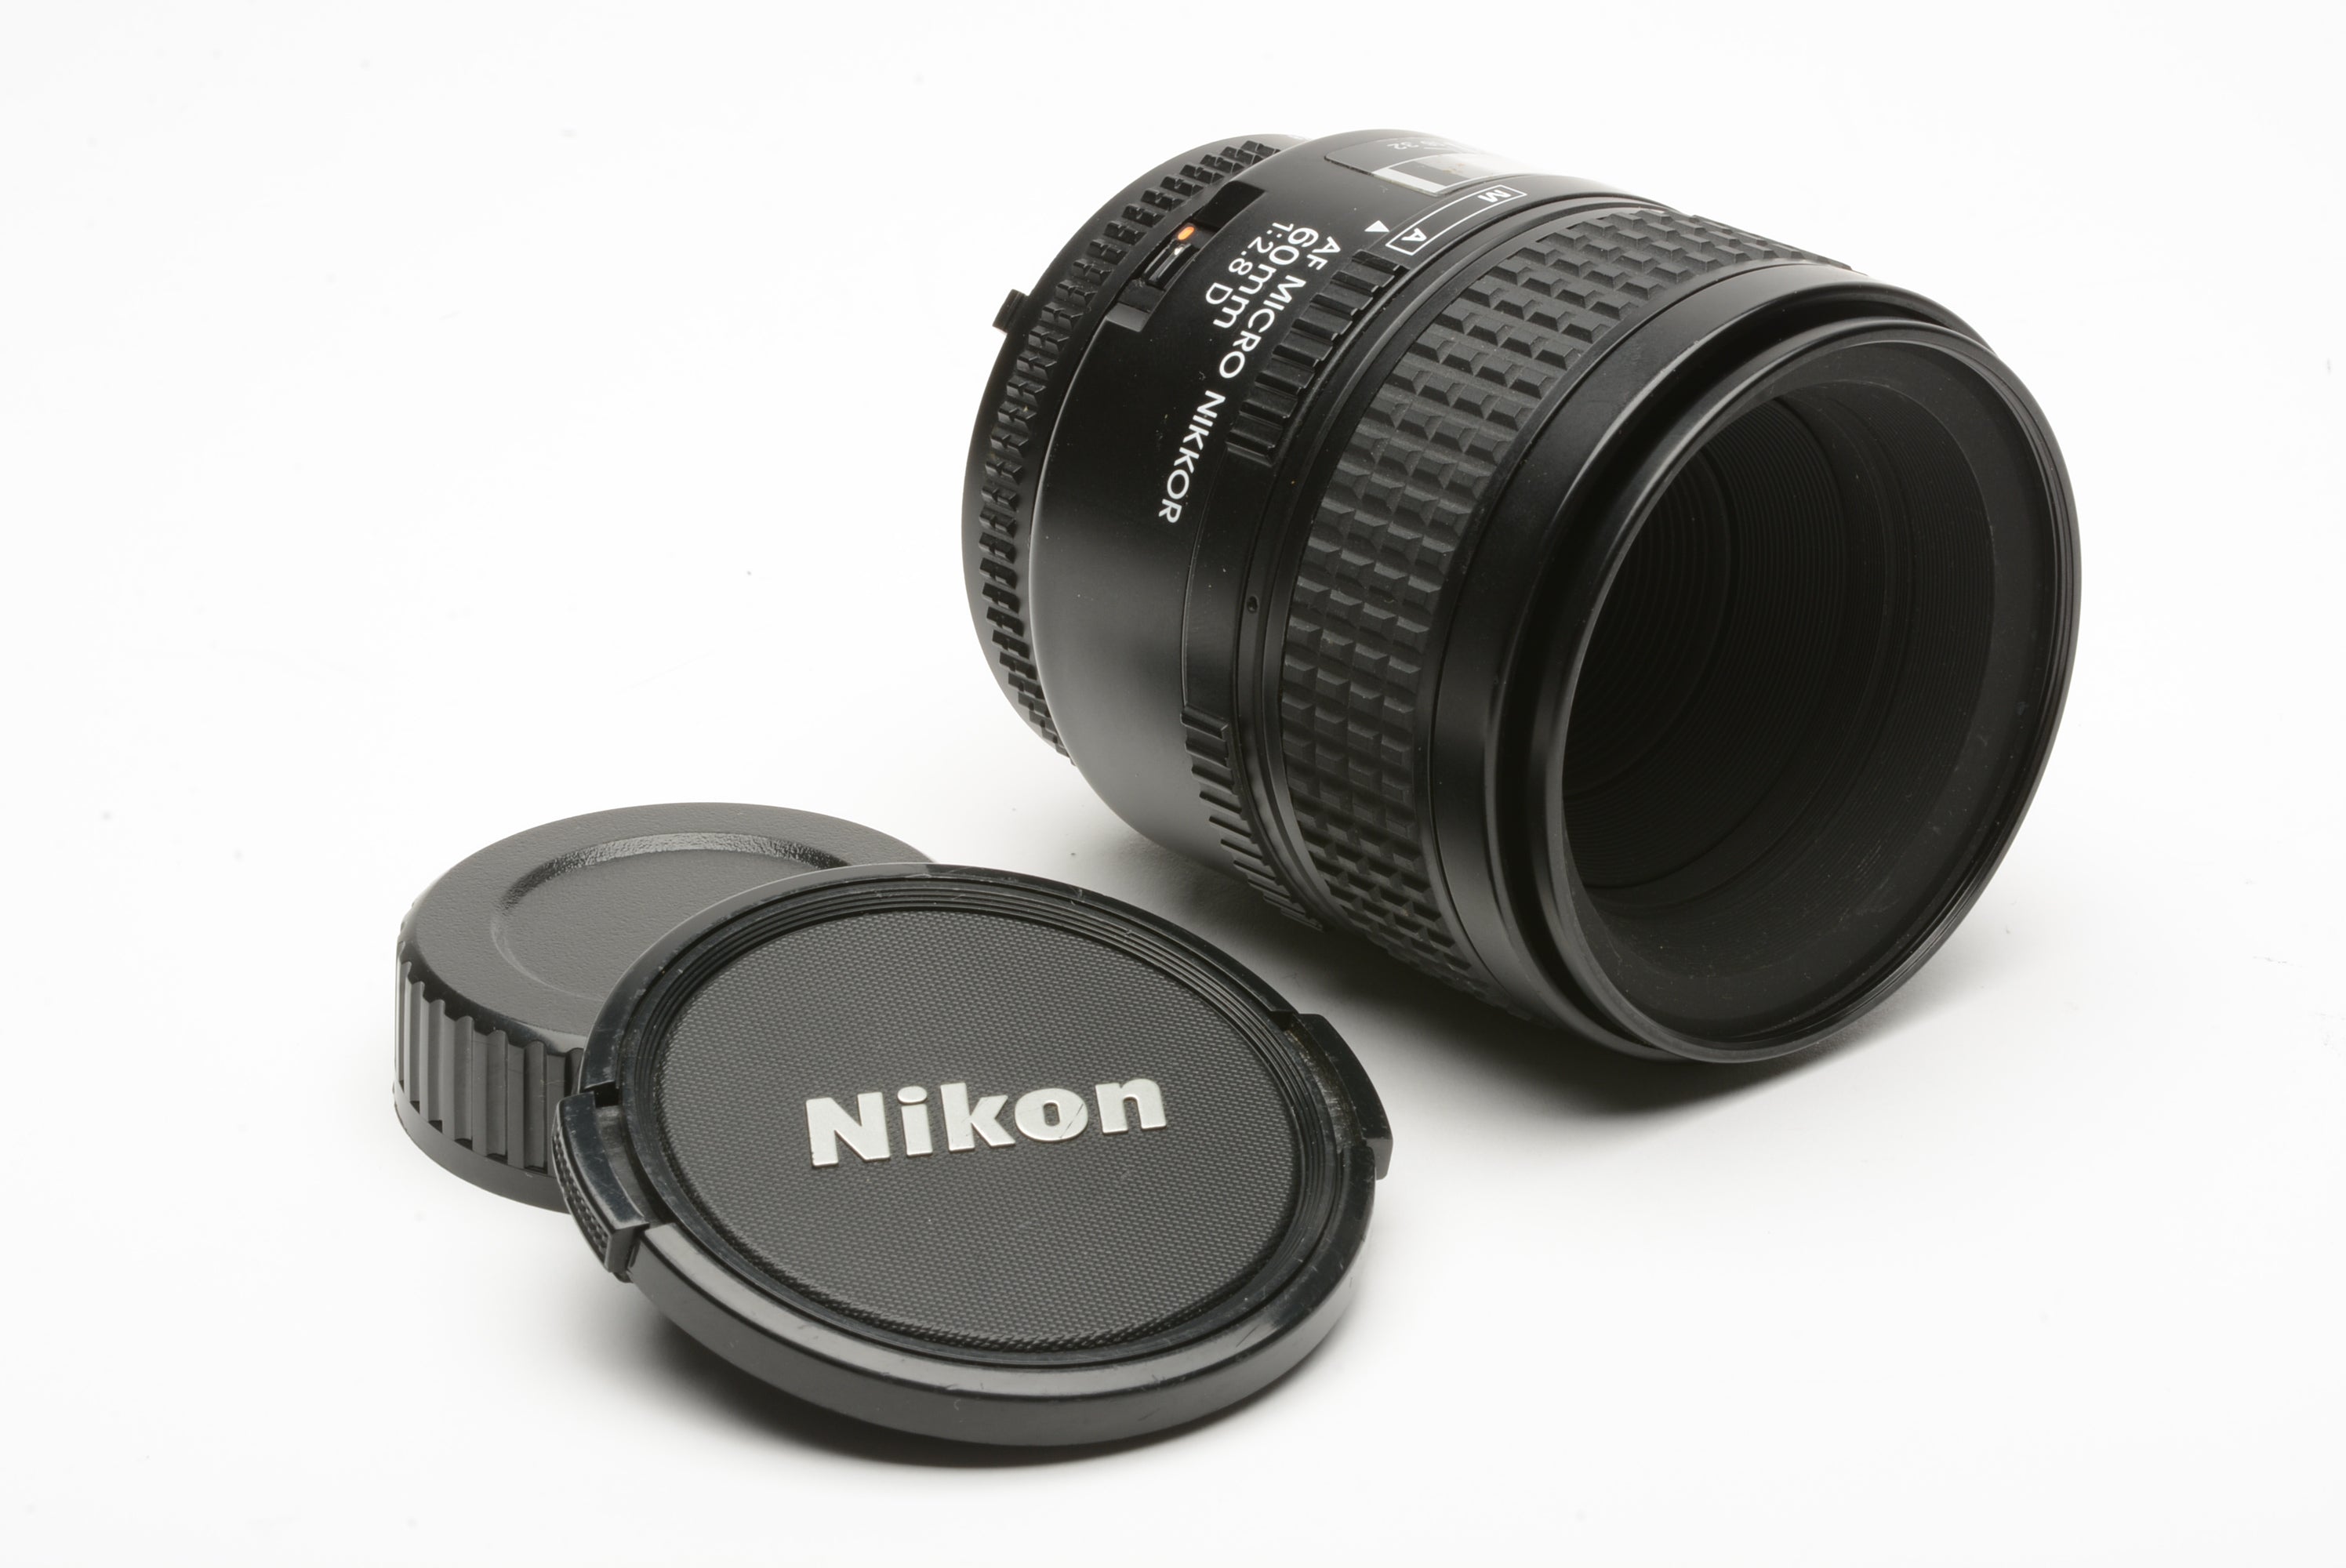 Nikon AF Micro Nikkor 60mm f2.8 Macro lens, caps, very clean and sharp!